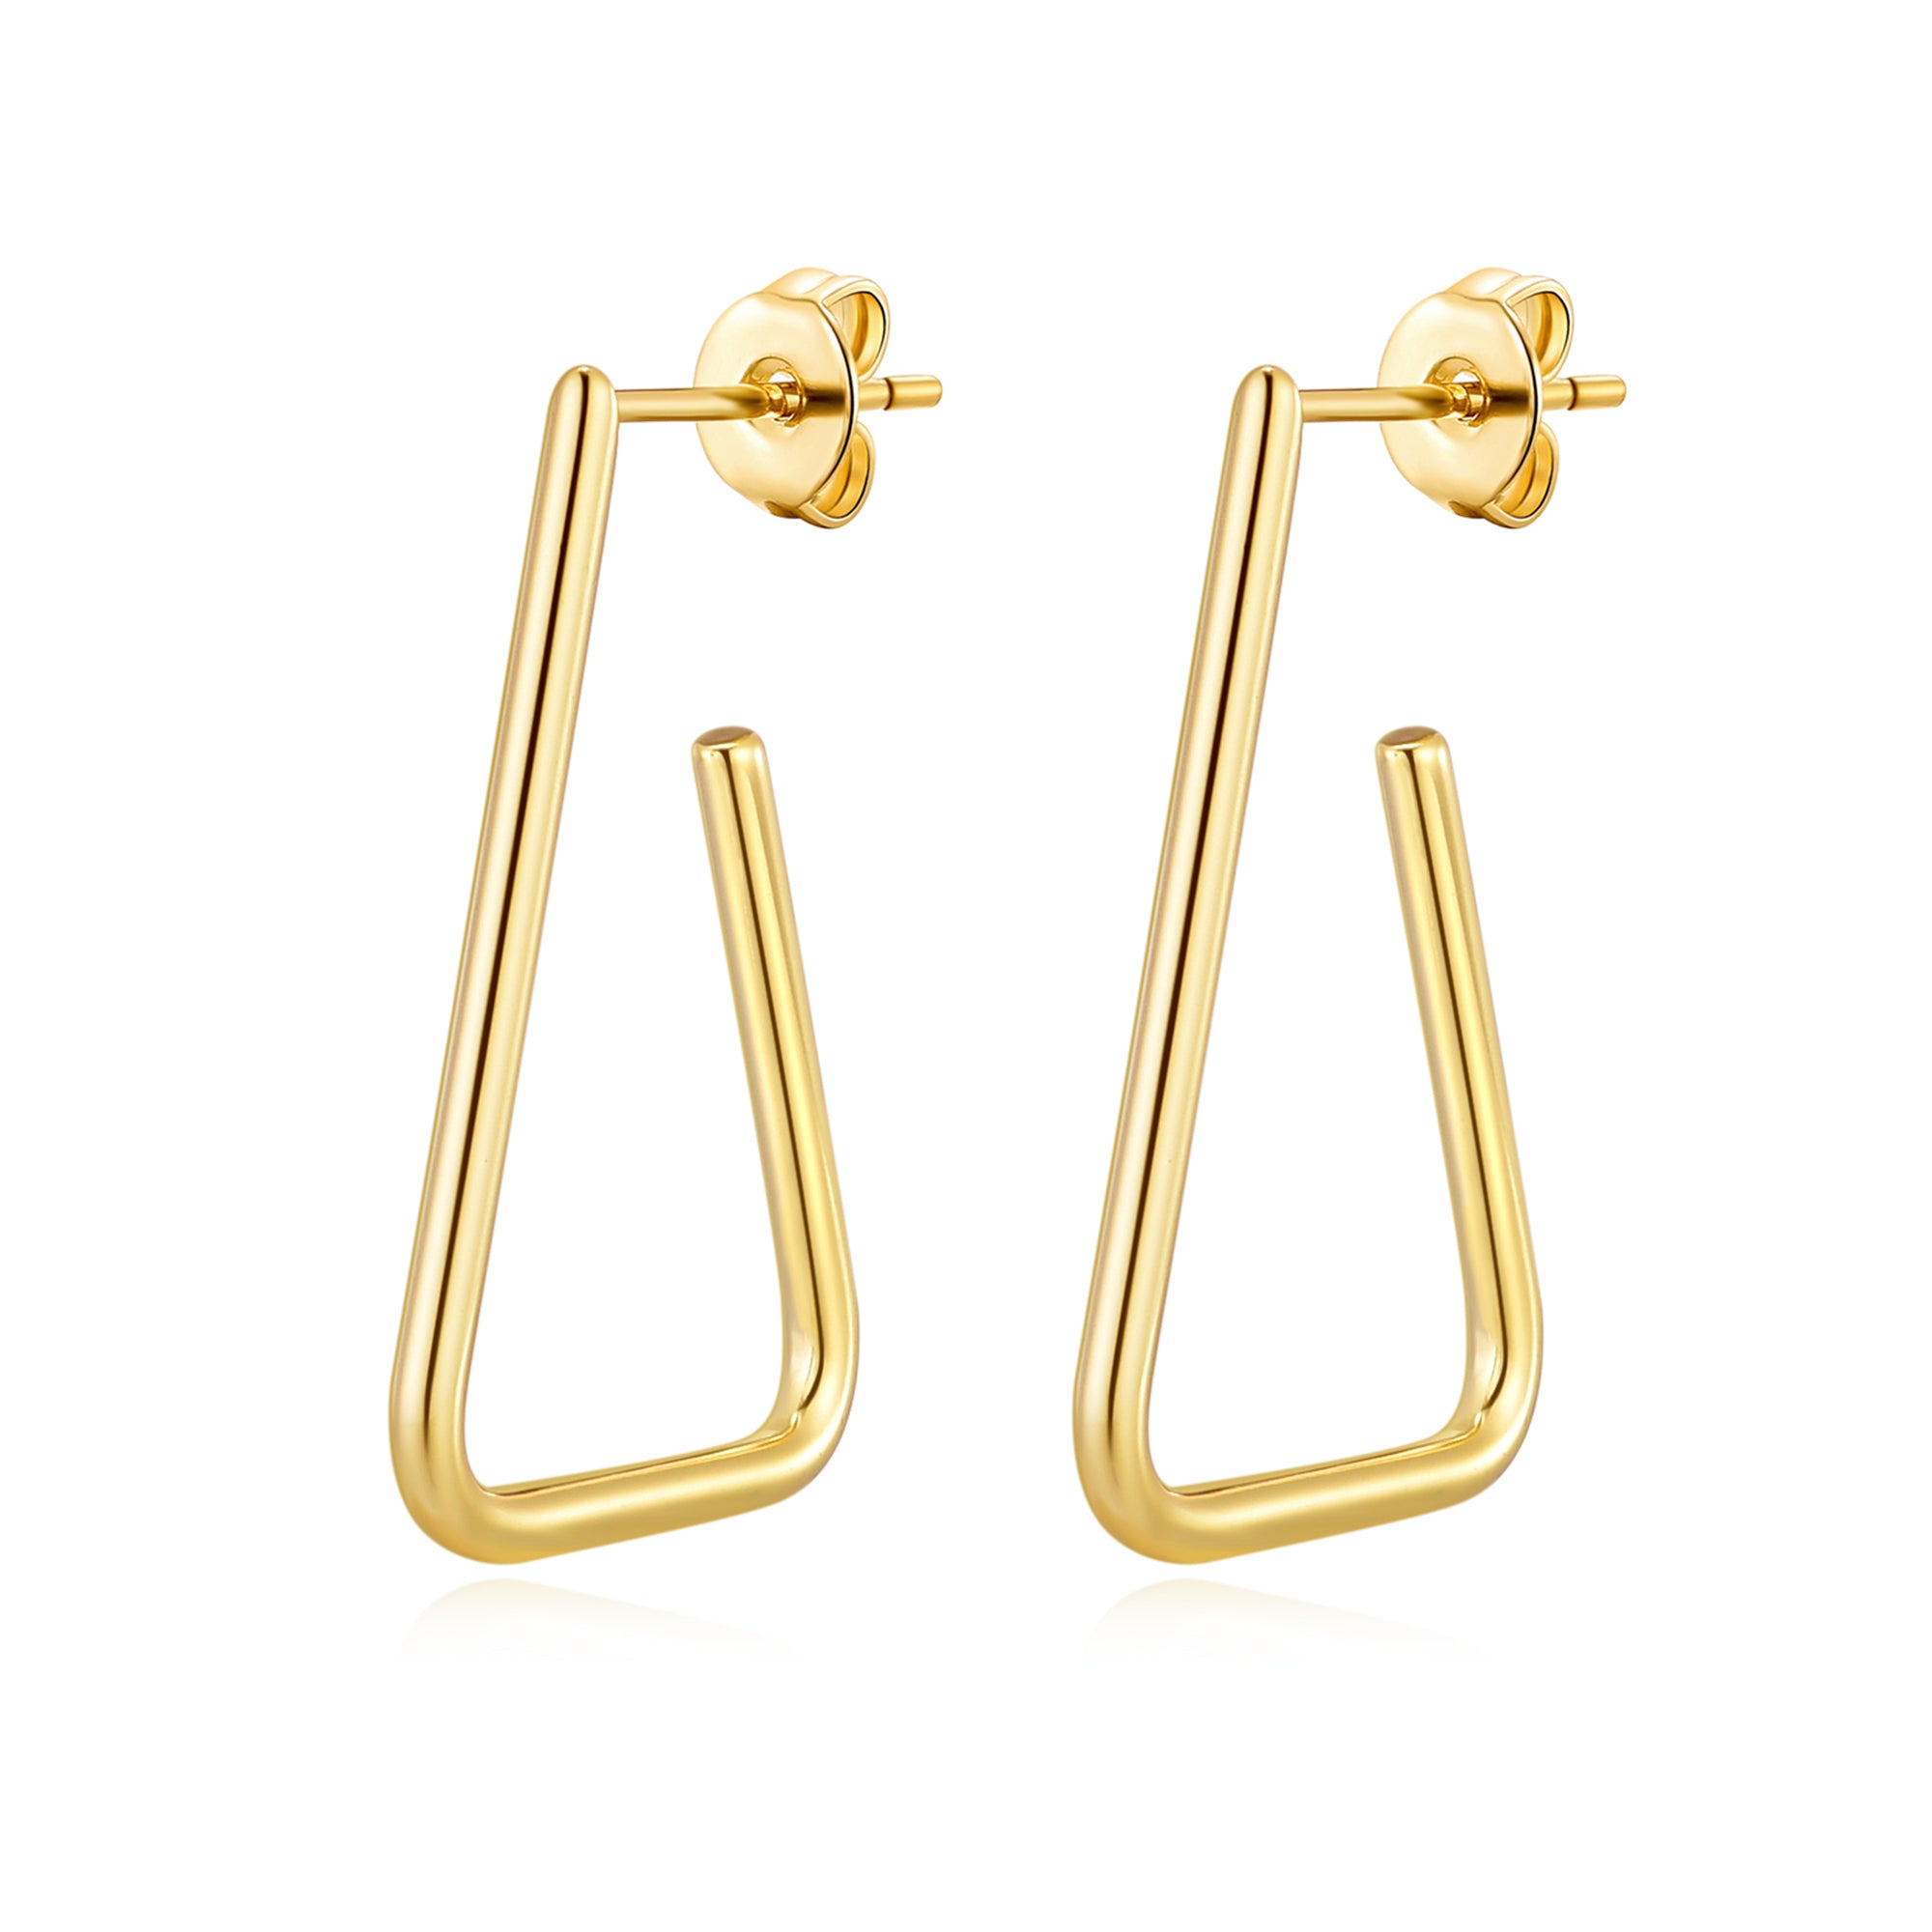 Gold Plated Triangle Hoop Earrings by Philip Jones Jewellery